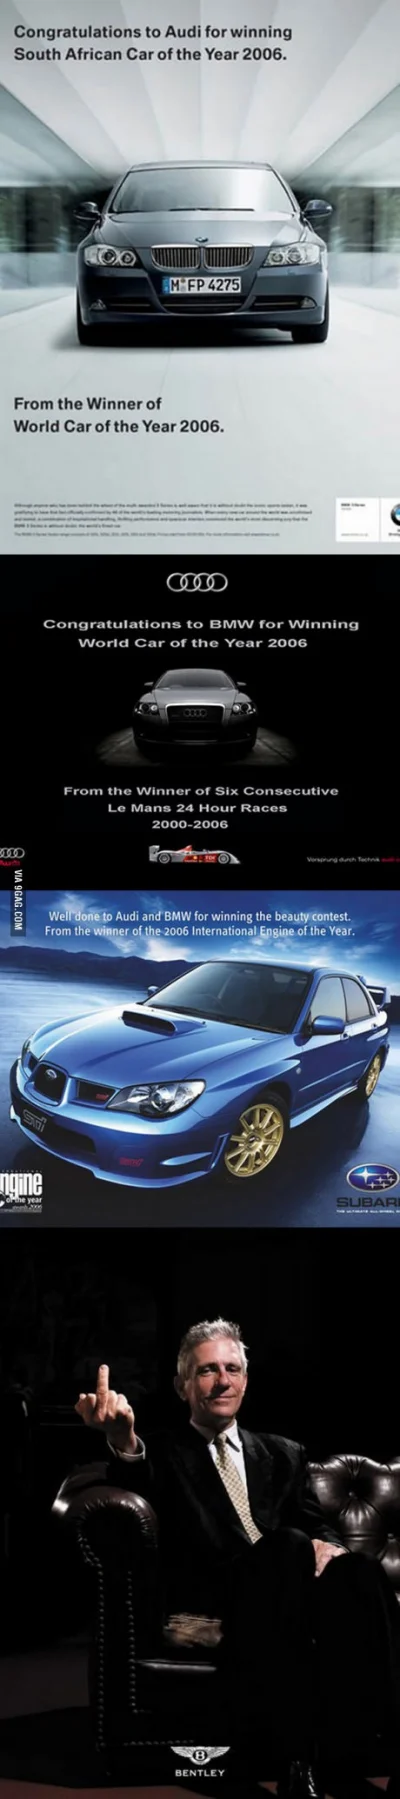 czasnawykopki - BMW vs. Audi vs. Subaru vs. Bentley

#bmwboners #audiboners #subarubo...